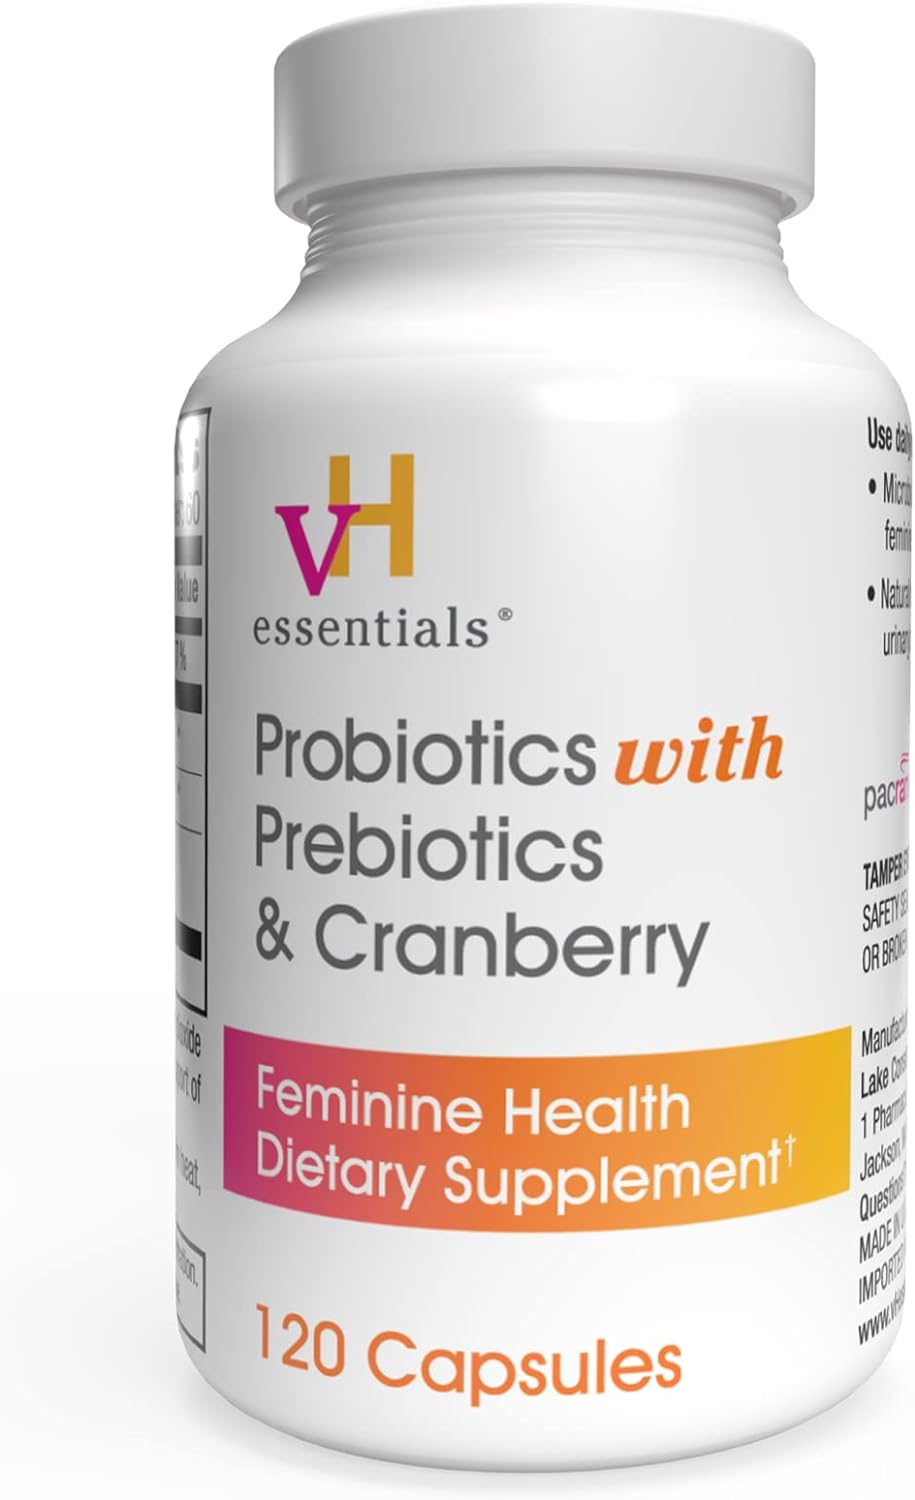 vH essentials Probiotics Review